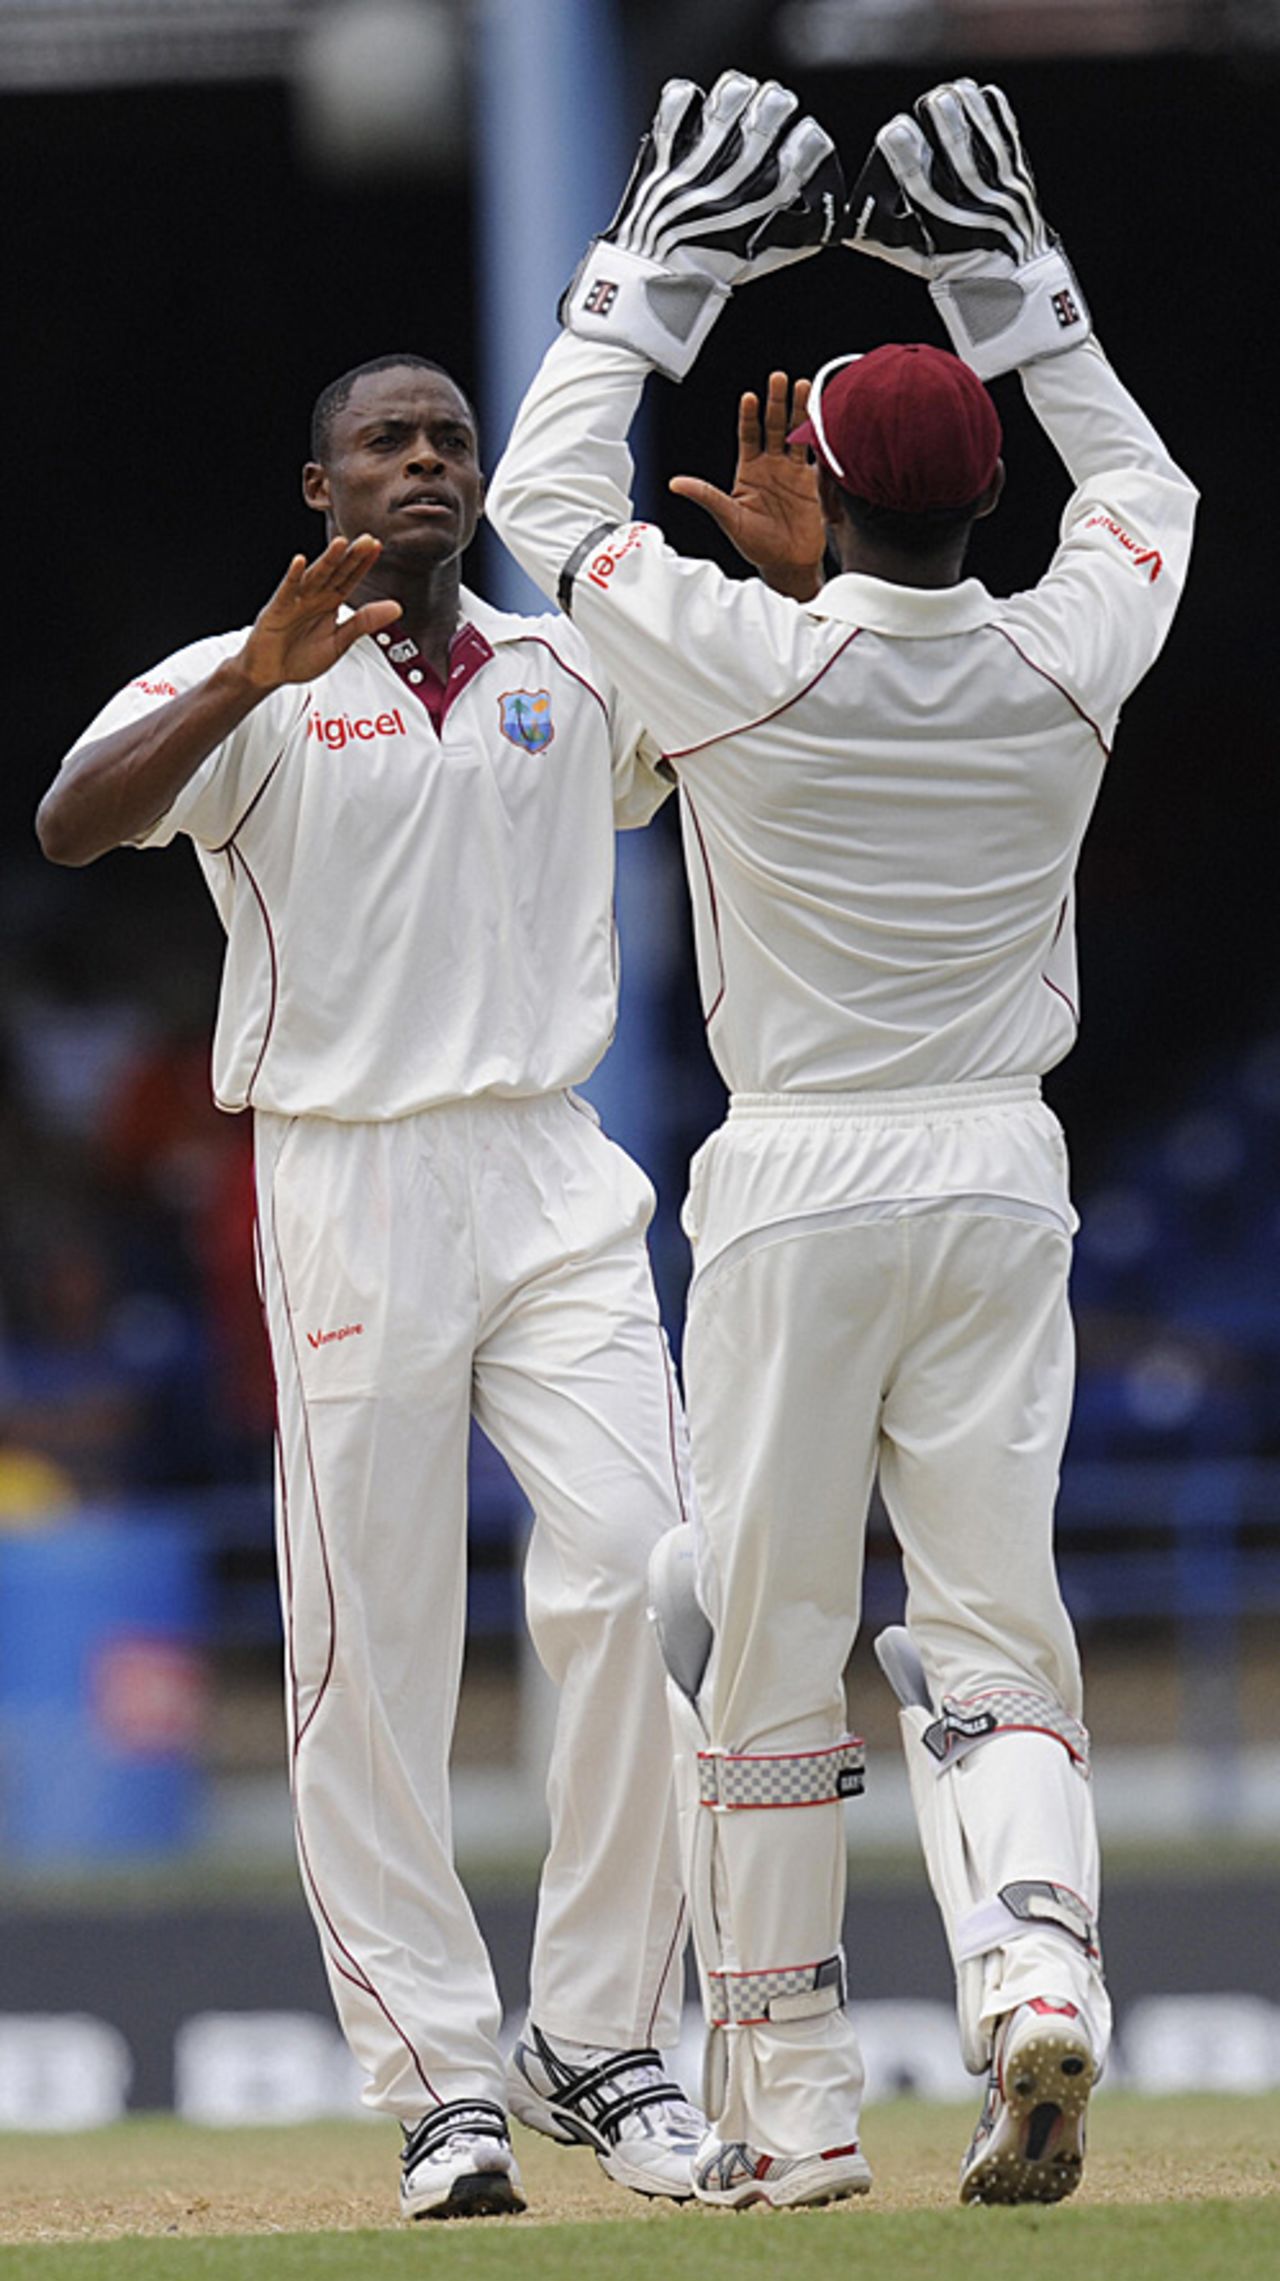 Denesh Ramdin congratulates Daren Powell on the wicket of Alastair Cook, West Indies v England, 5th Test, Trinidad, March 6, 2009